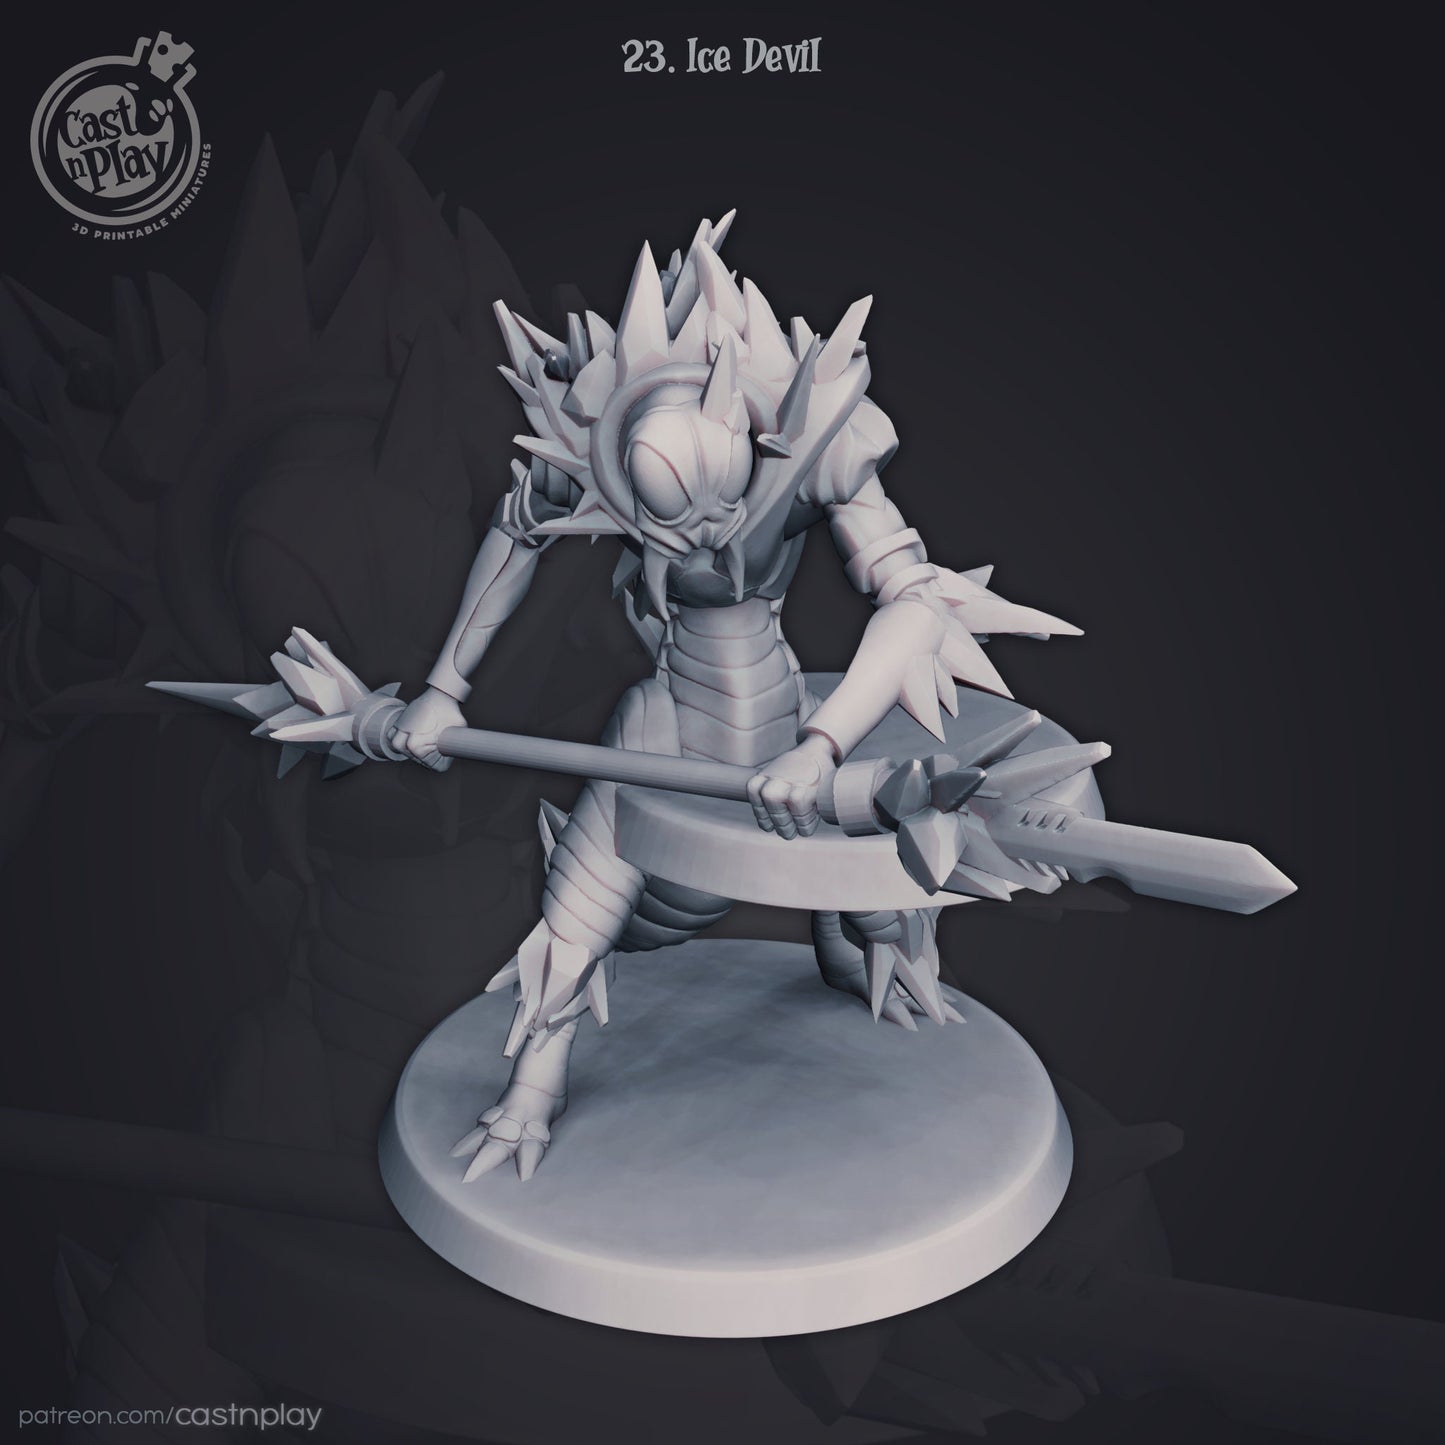 ICE DEVIL, by Cast n Play // 3D Print on Demand / D&D / Pathfinder / RPG